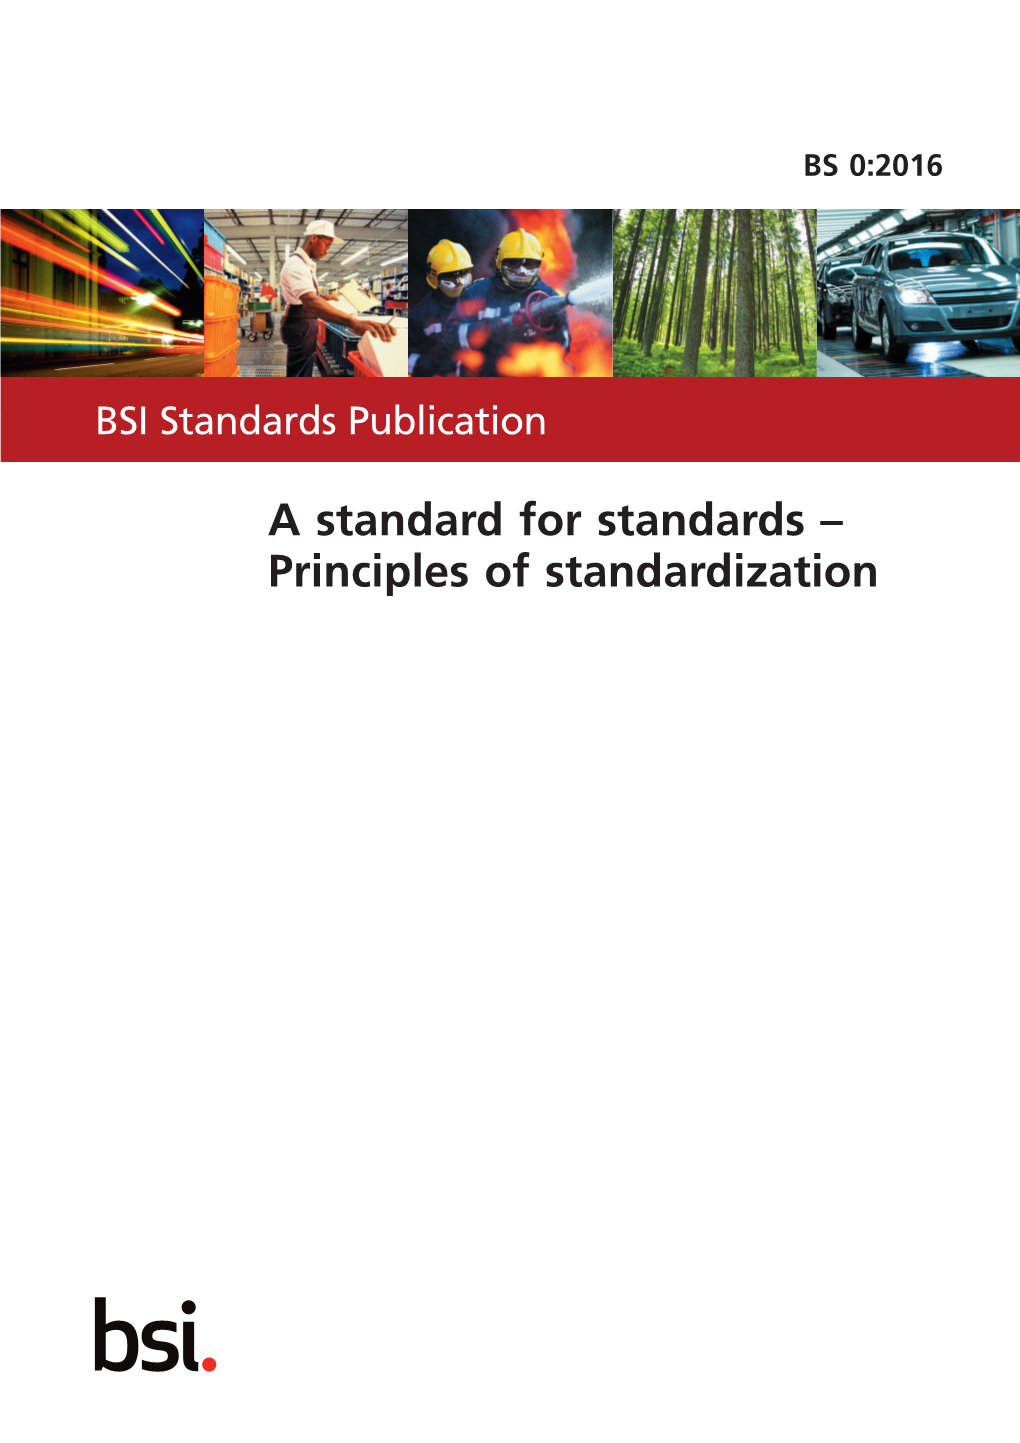 A Standard for Standards – Principles of Standardization